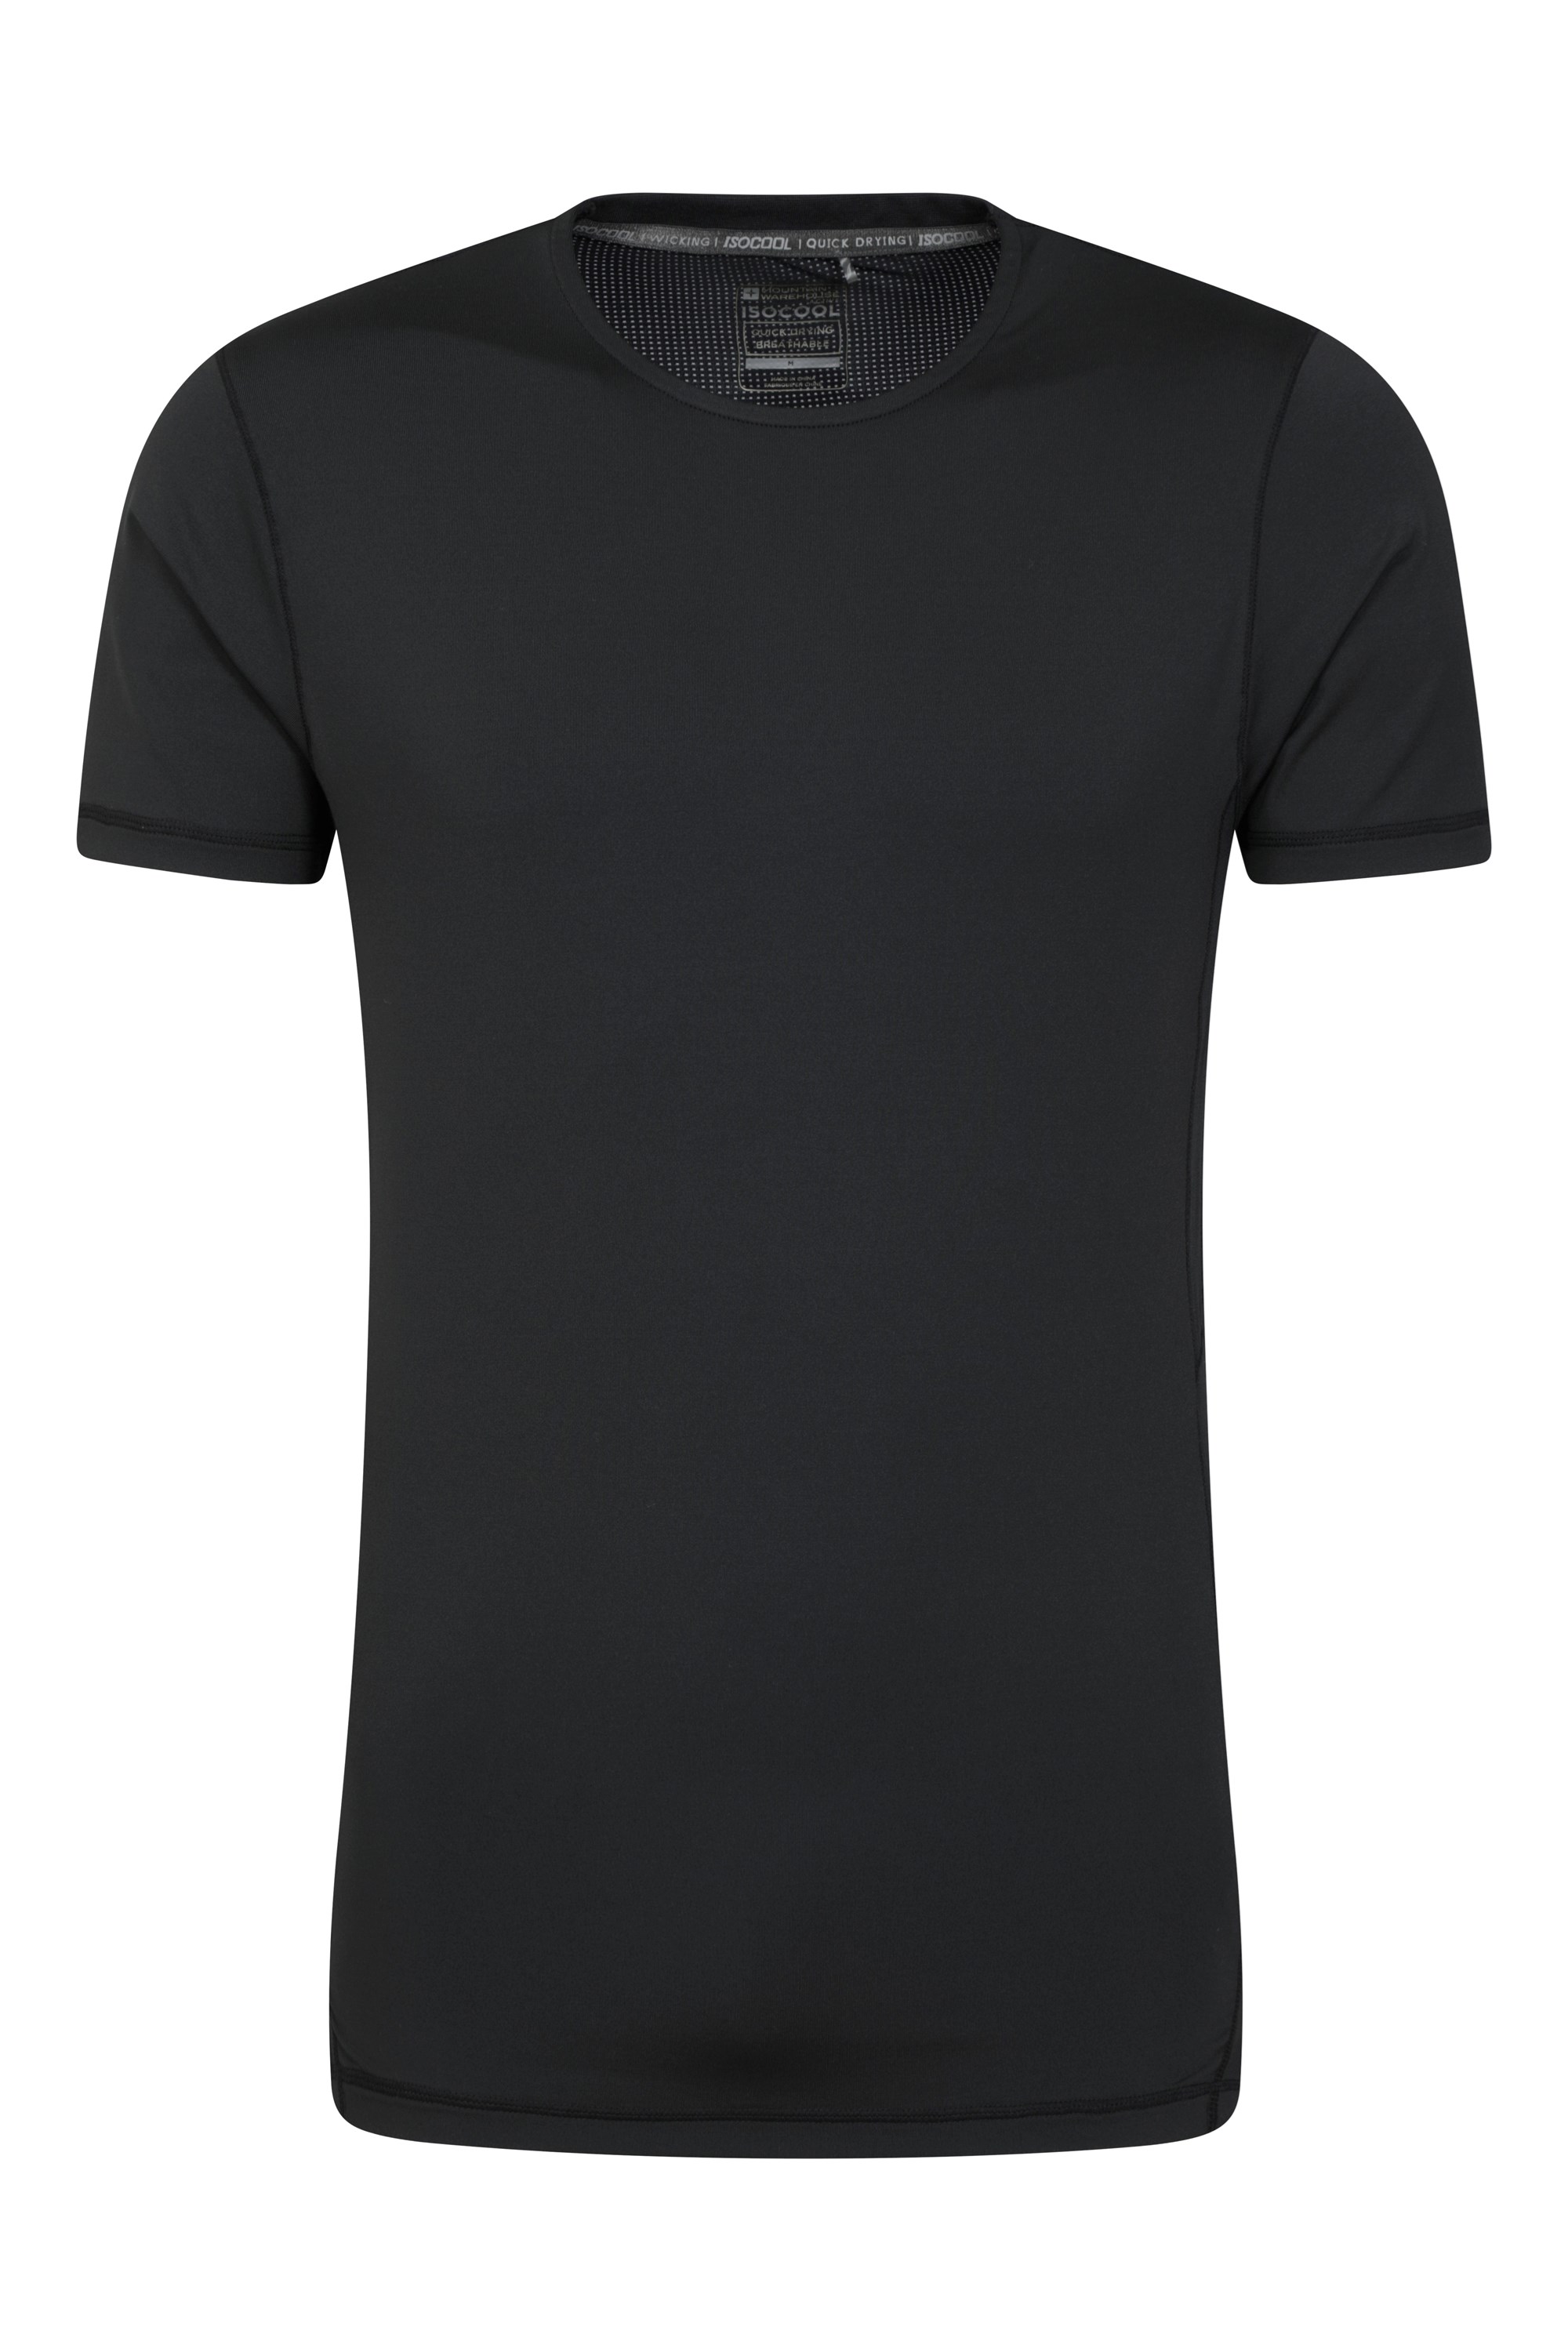 Mantra Isocool Mens T-shirt - Black